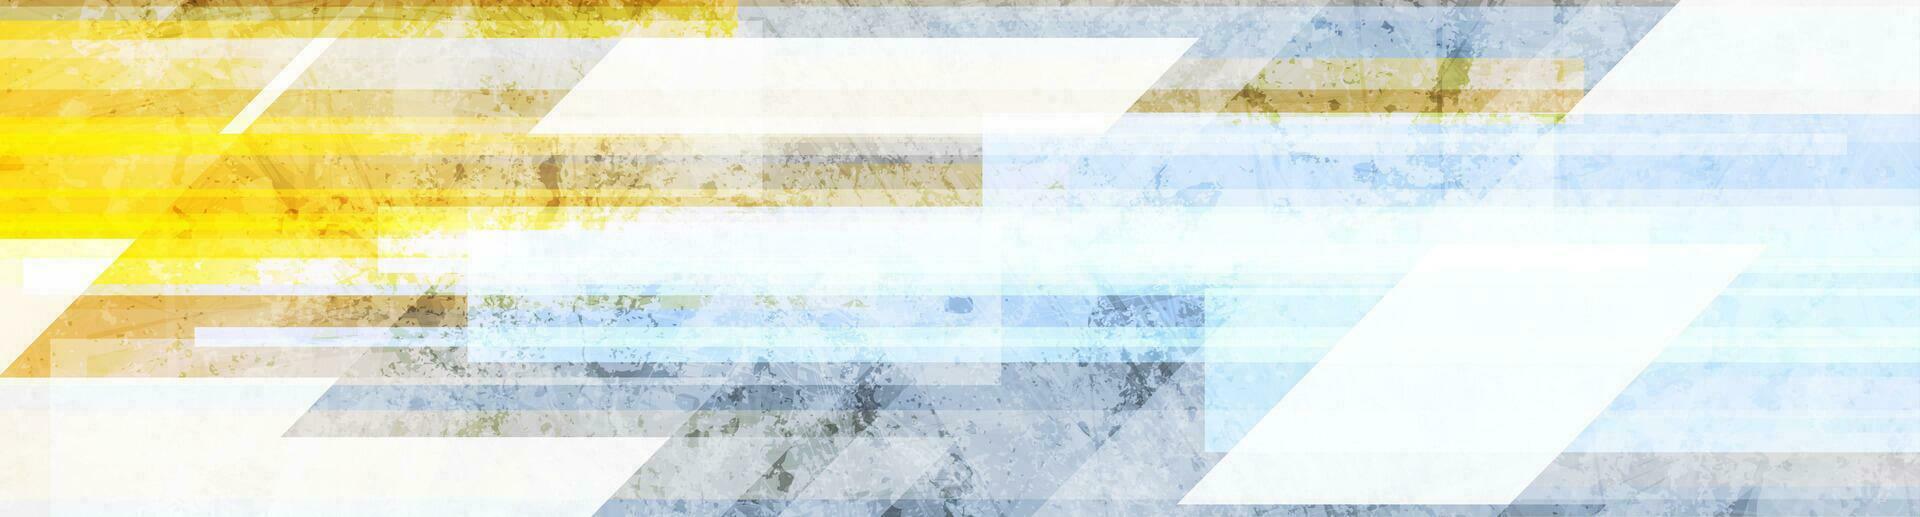 geel en blauw grunge meetkundig abstract breed achtergrond vector